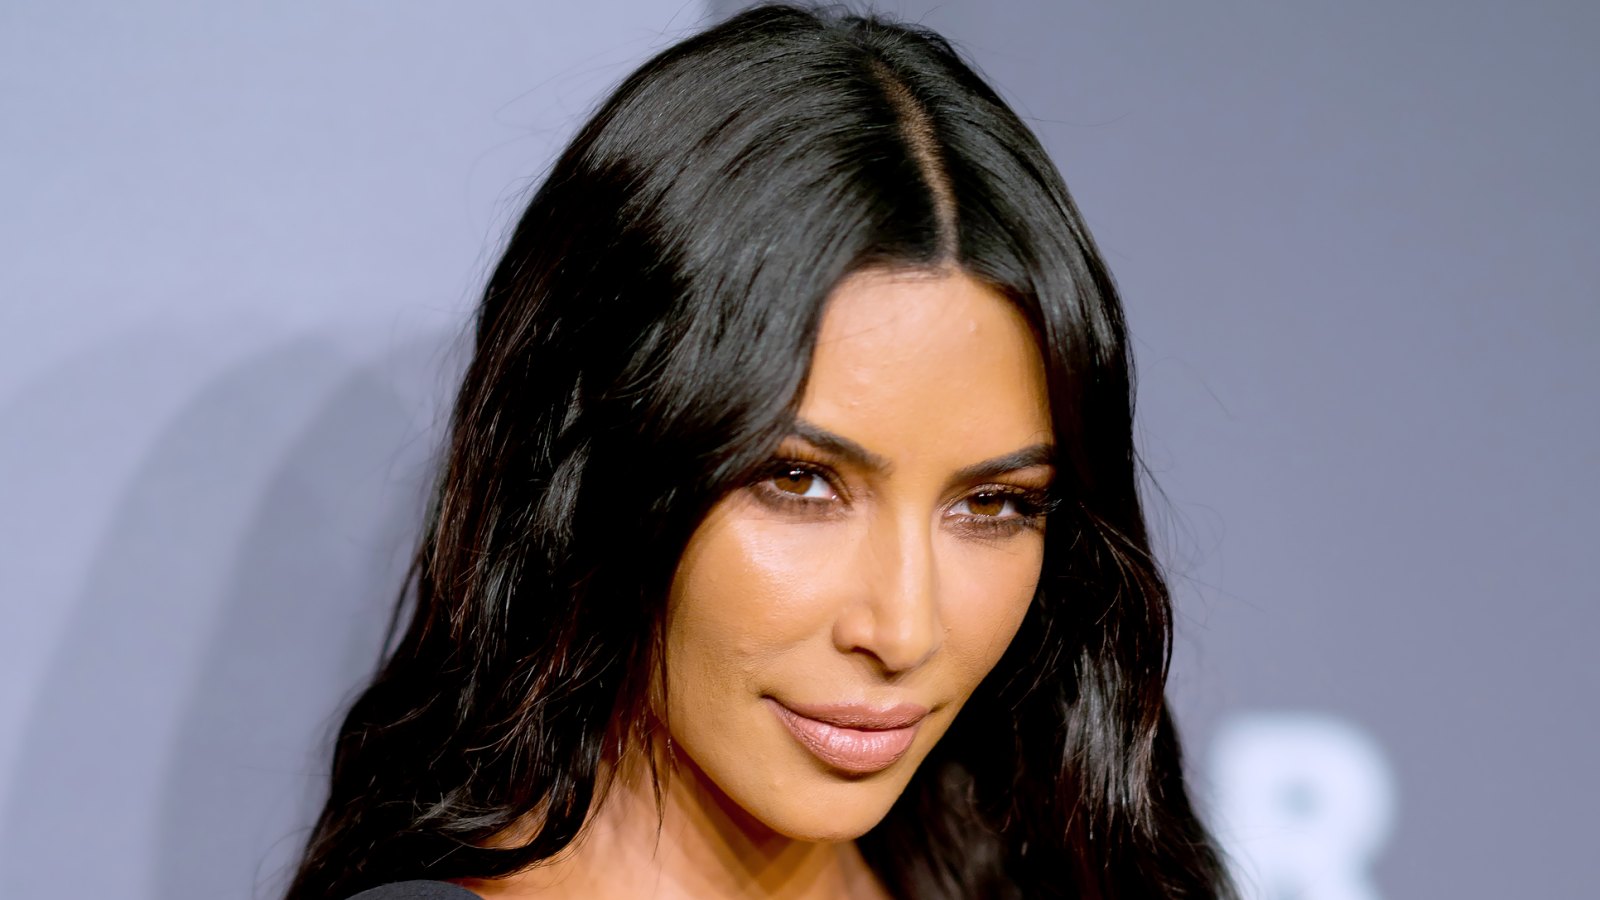 Kim Kardashian reveals details of Paris robbery on 'Keeping Up